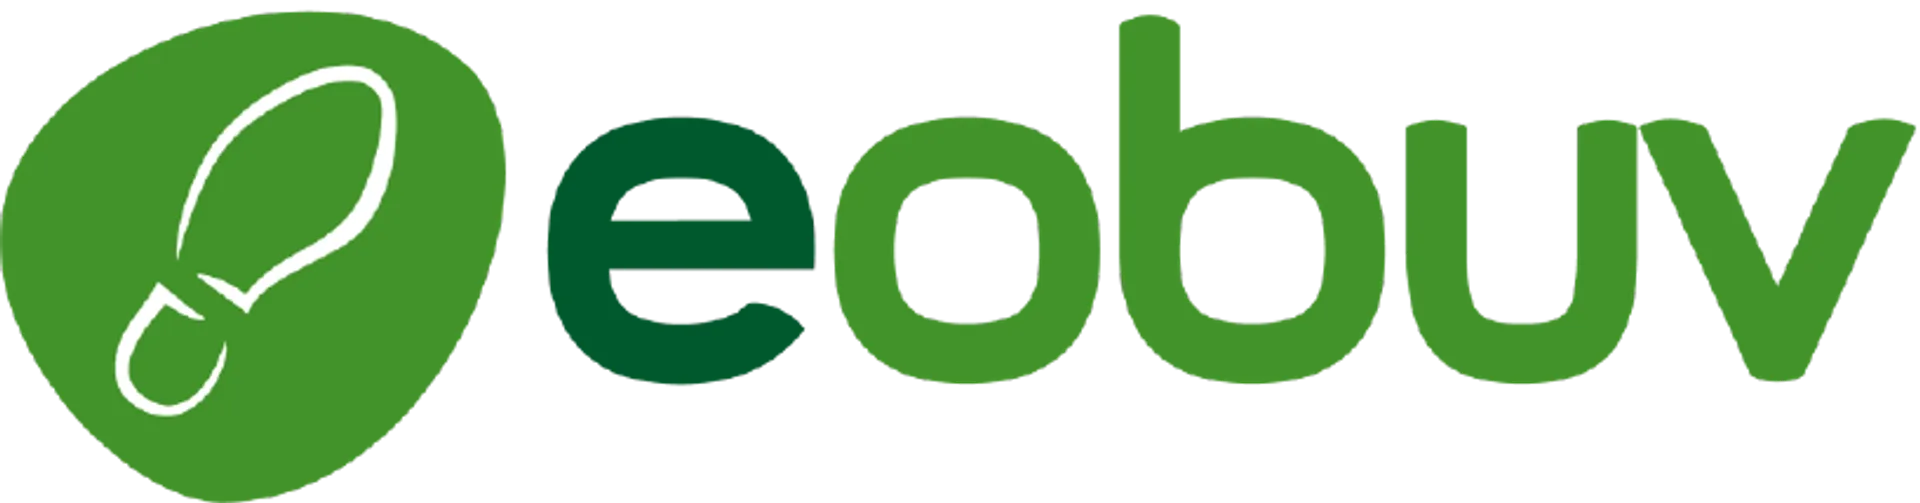 EOBUV.CZ logo of current flyer